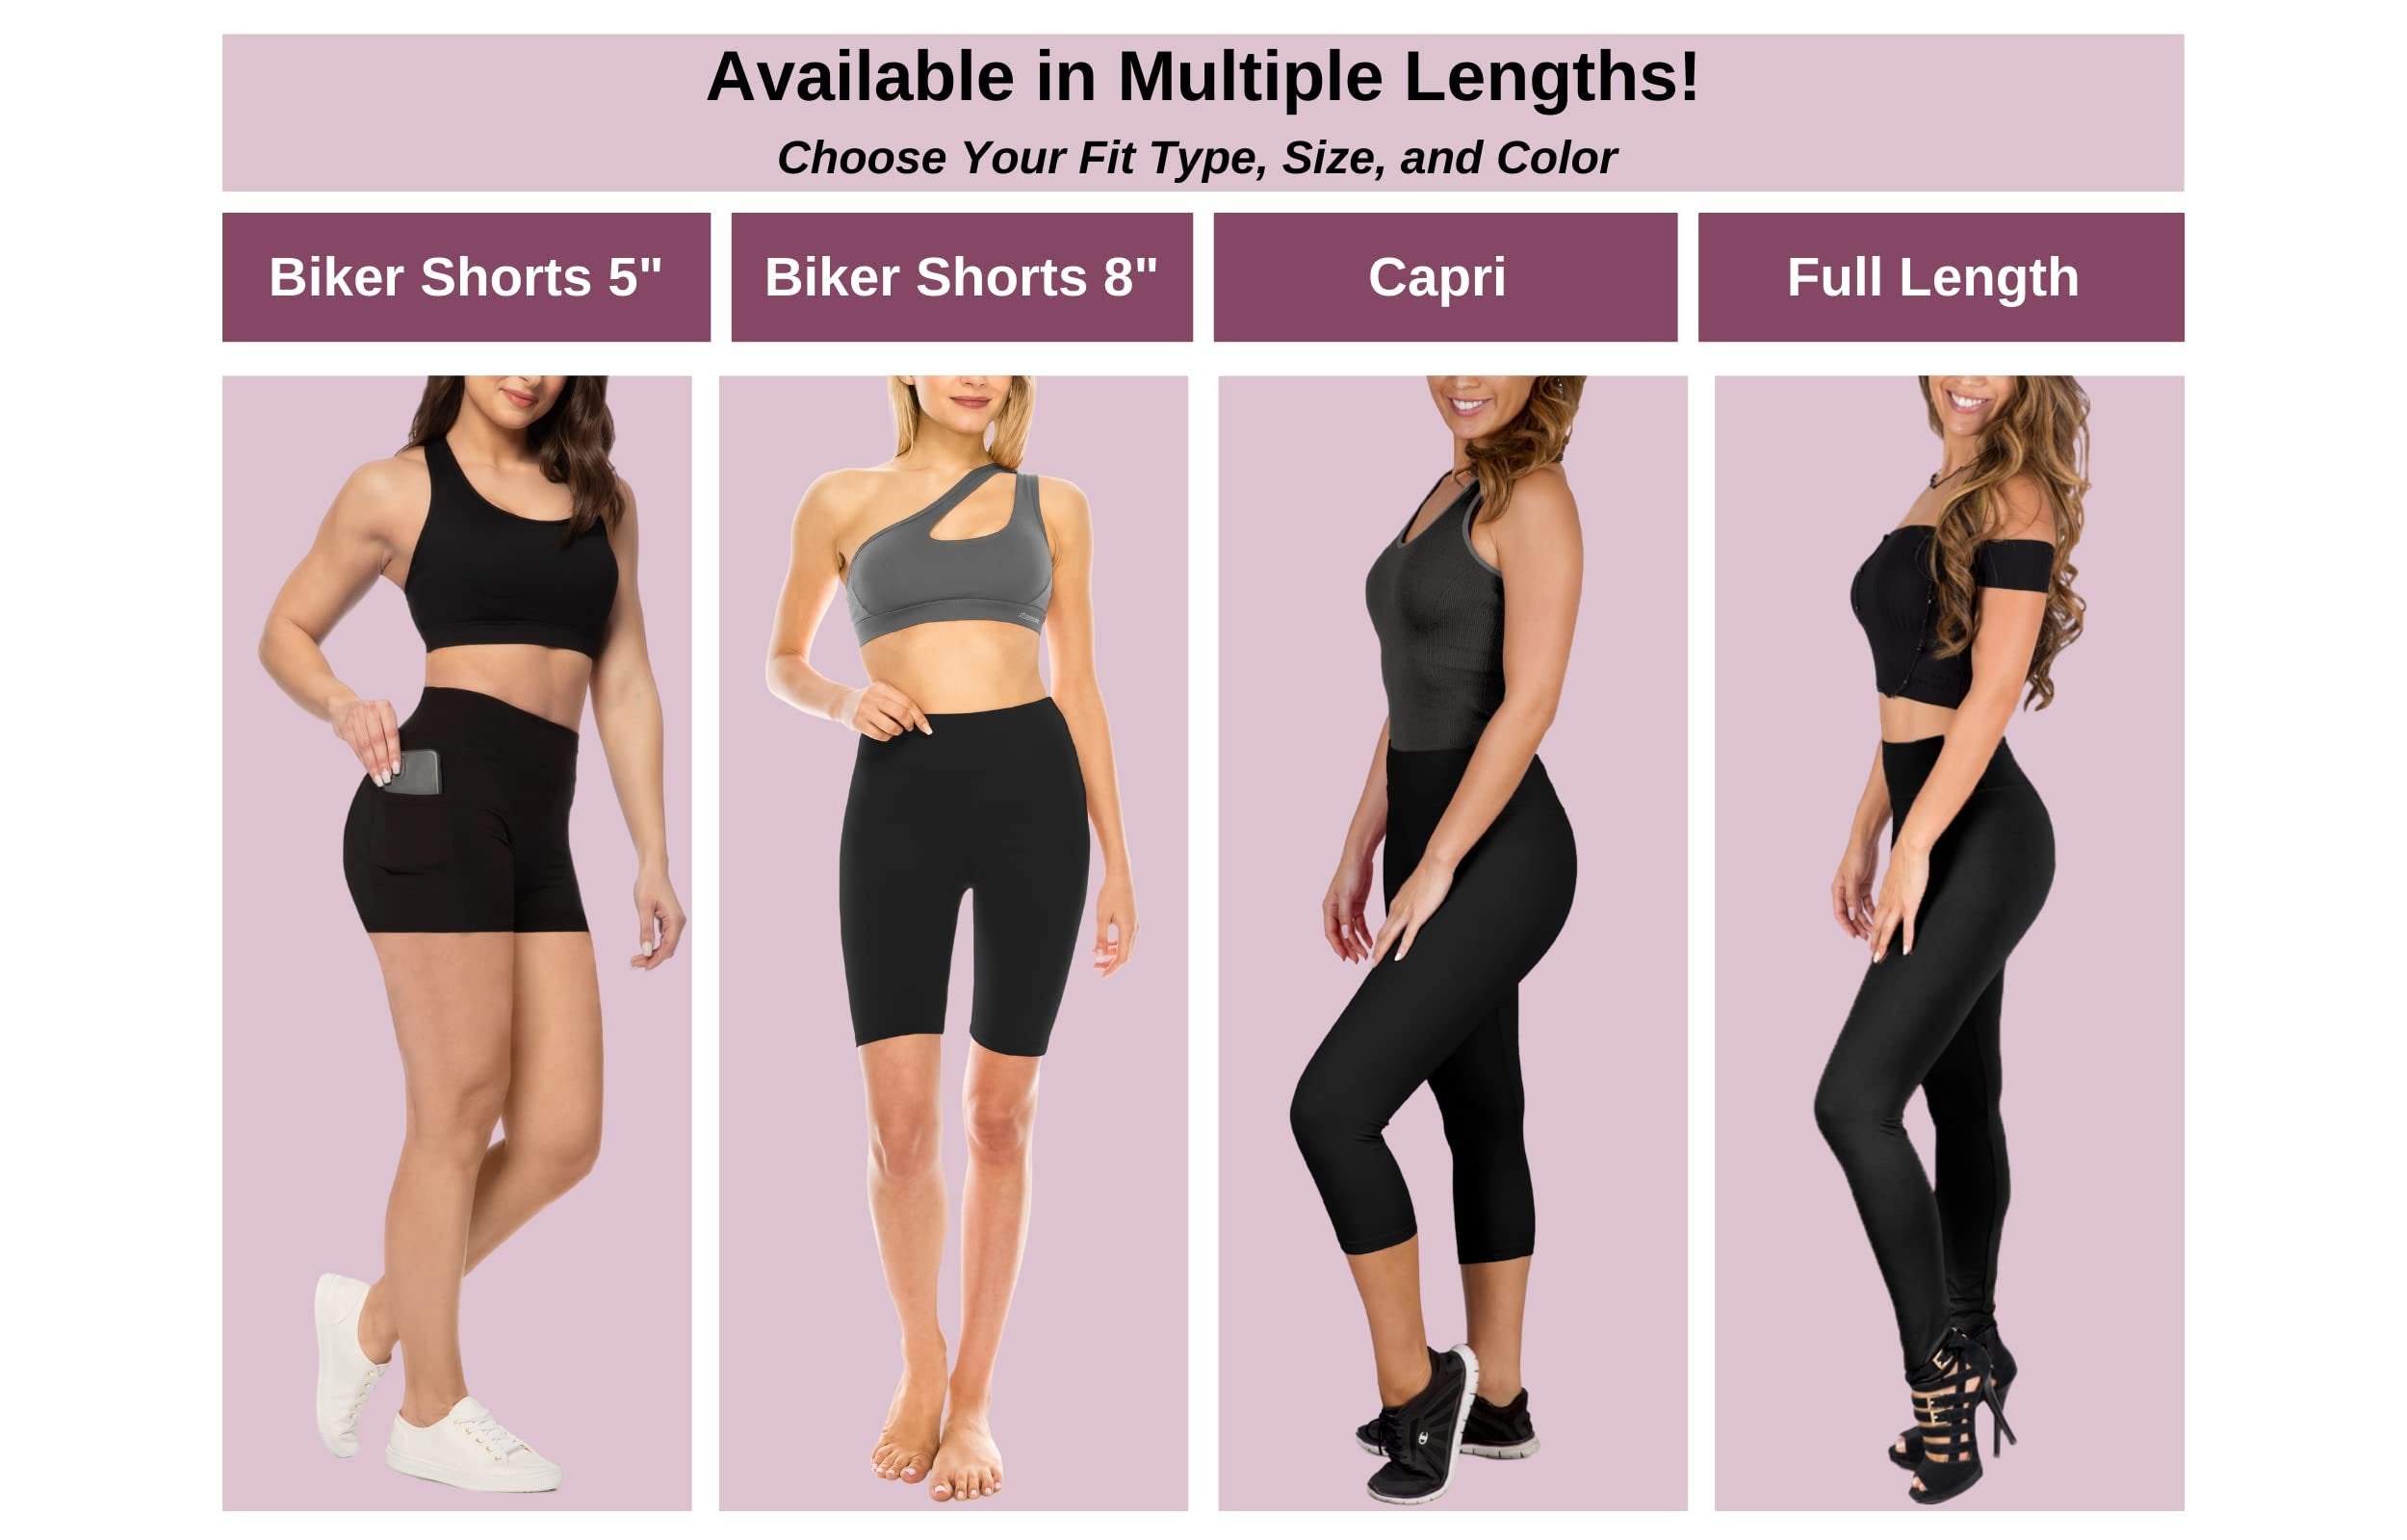 SATINA High Waisted Capri Leggings for Women - Capri Leggings for Women - High Waist for Tummy Control - Vintage Violet Capri Leggings for |3 Inch Waistband (One Size, Vintage Violet)